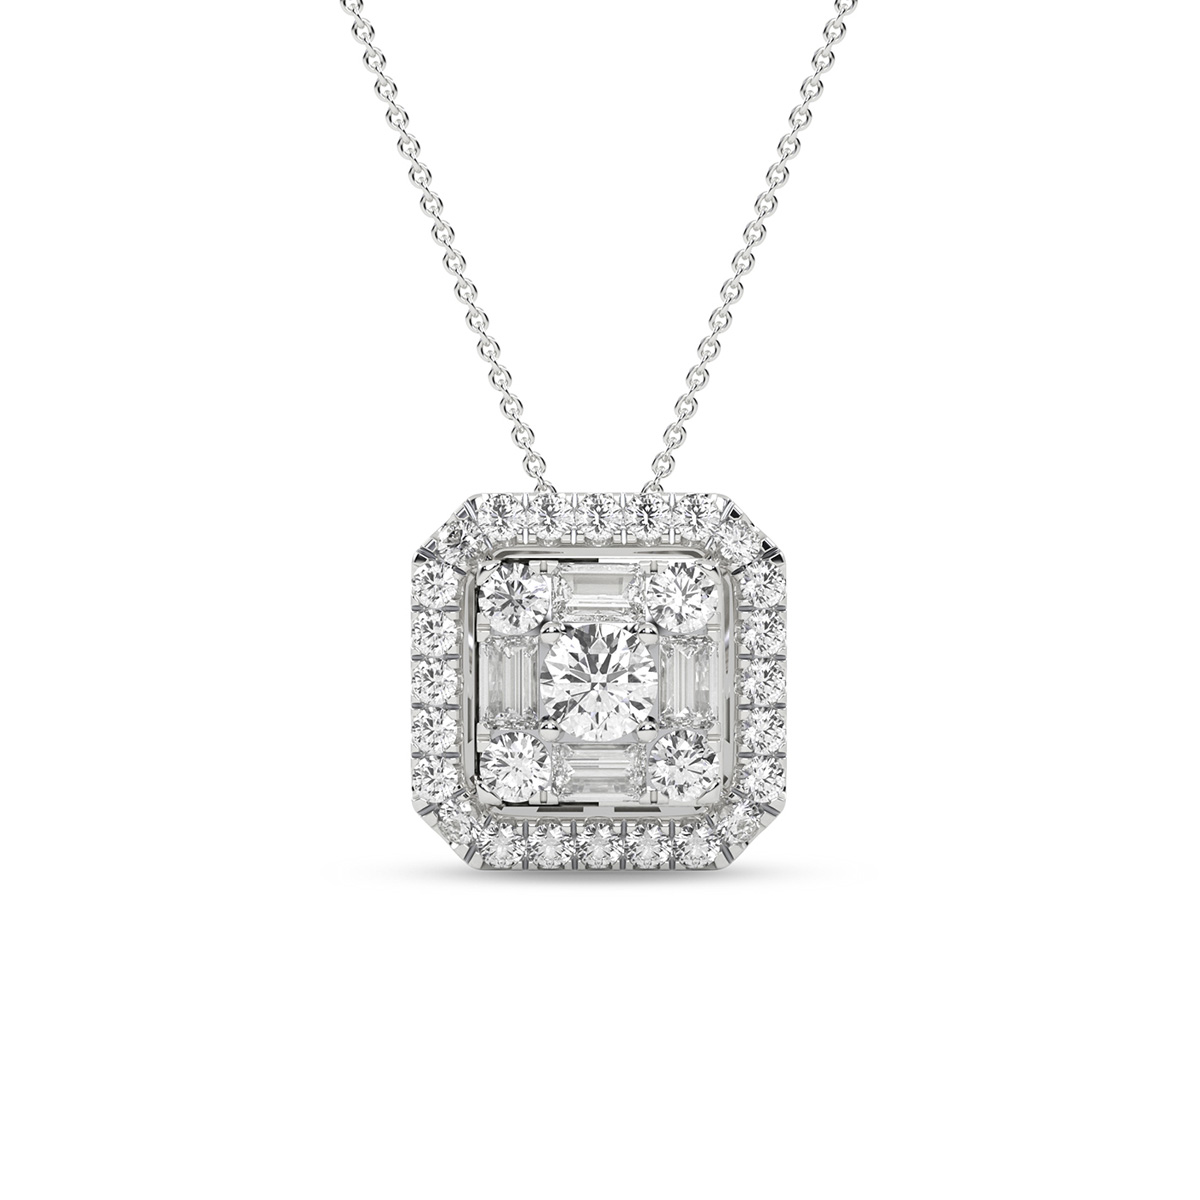 HE52827SWD4WN
14K White Gold Fancy cut diamond pendant